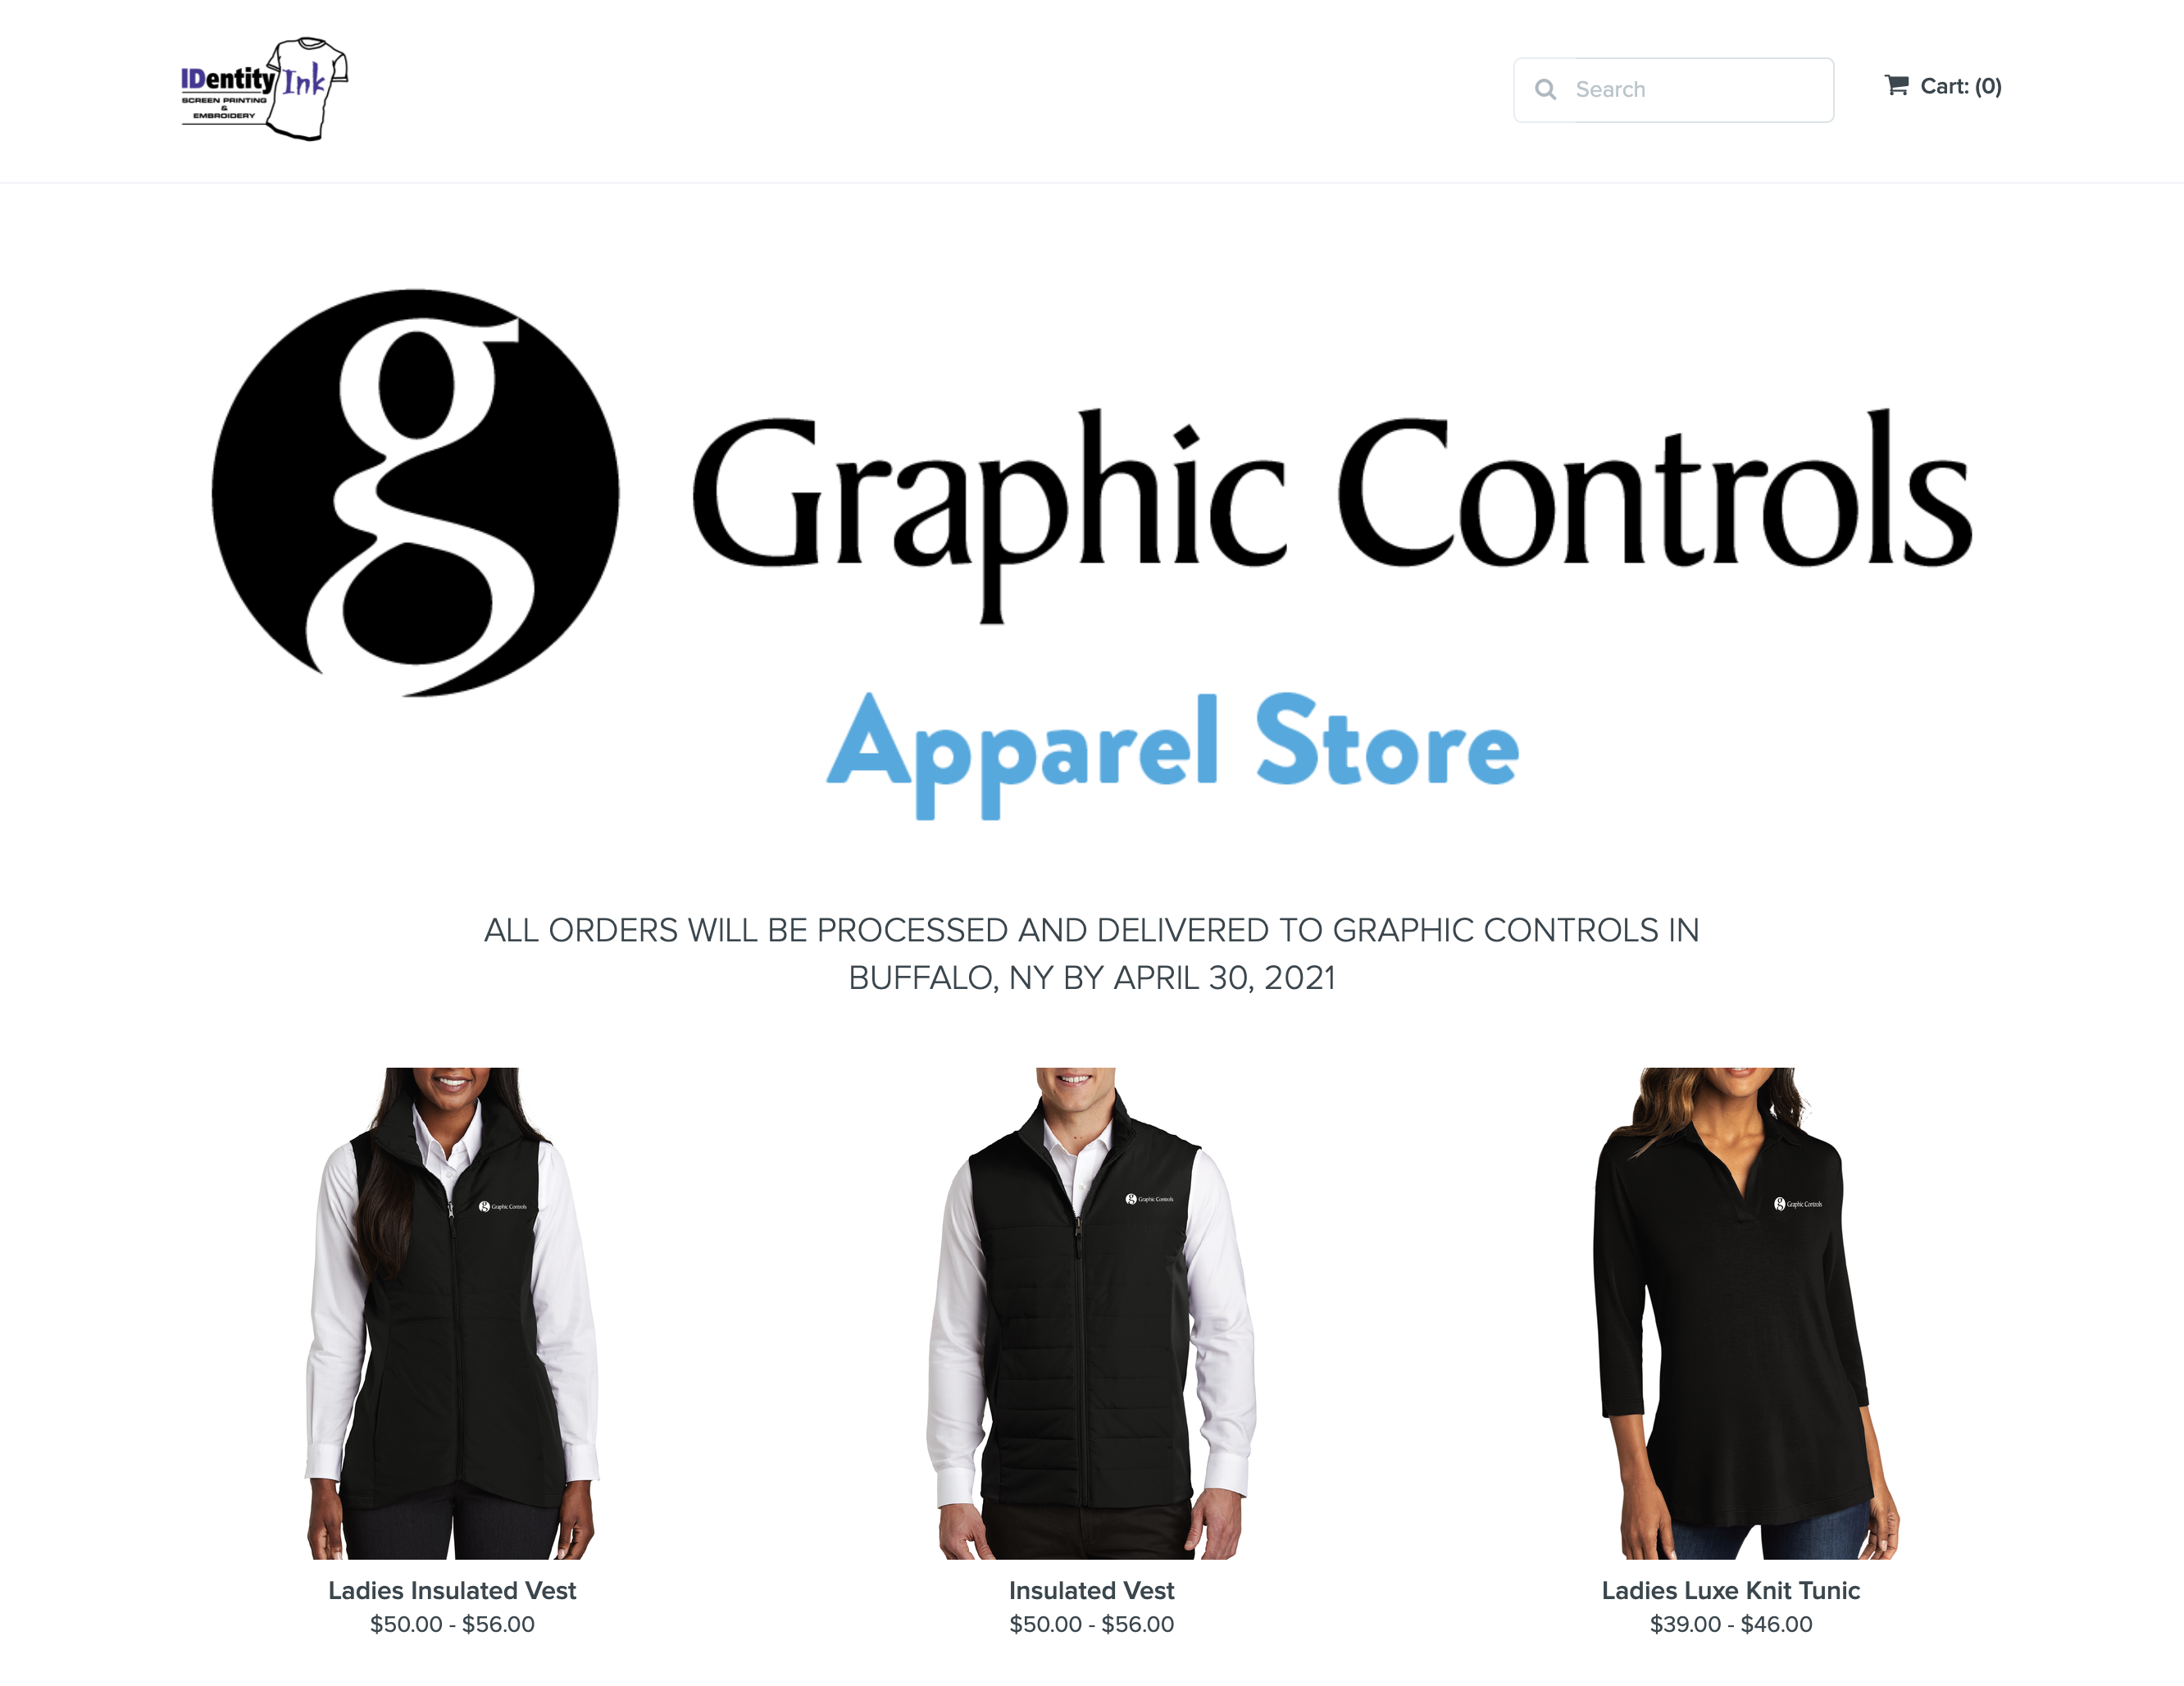 Graphic Controls Apparel Store